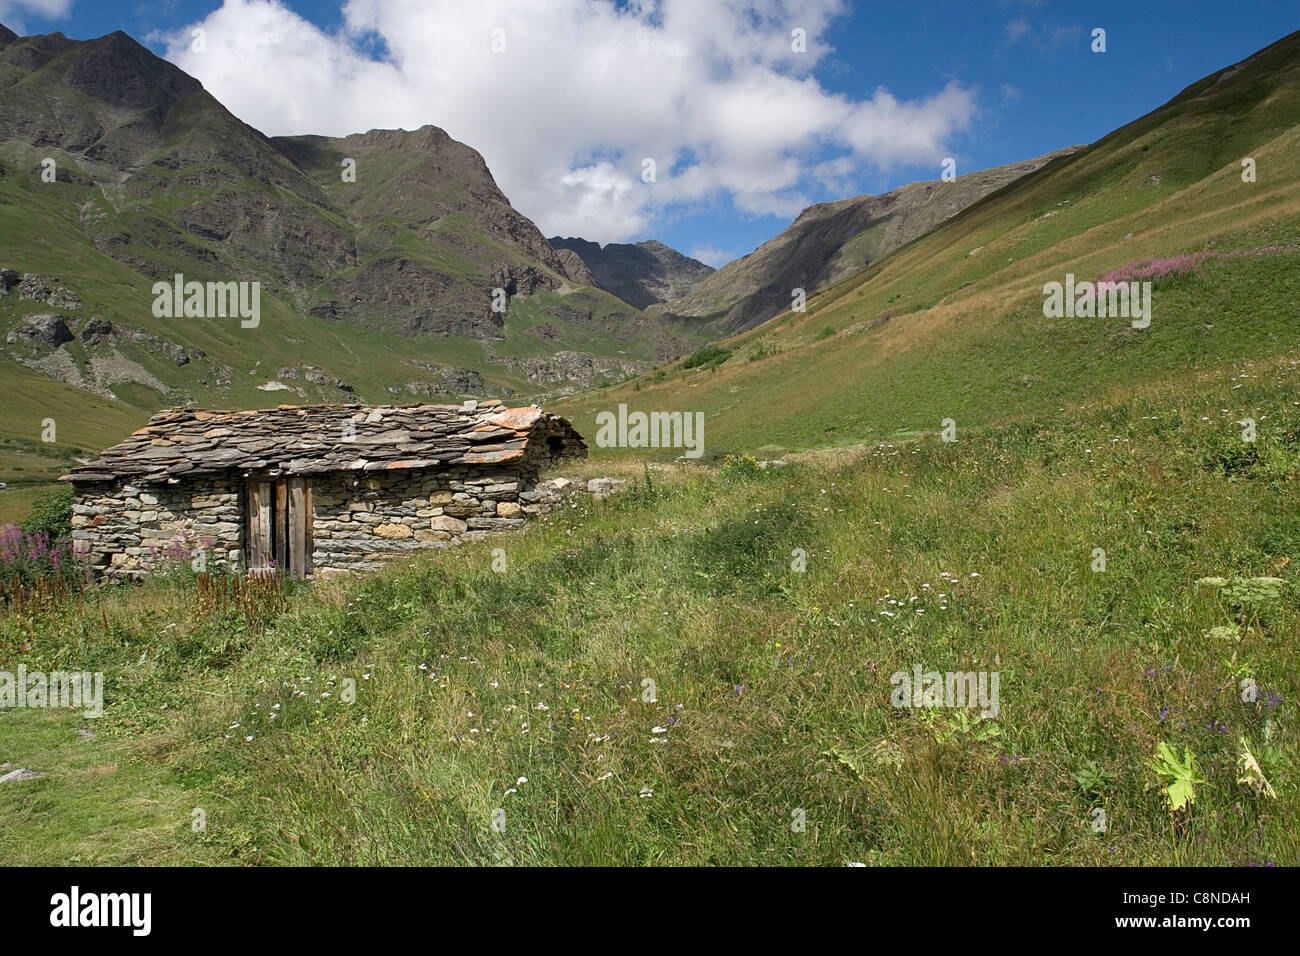 France, Savoie, Col d'Iseran shepherd's hut Stock Photo